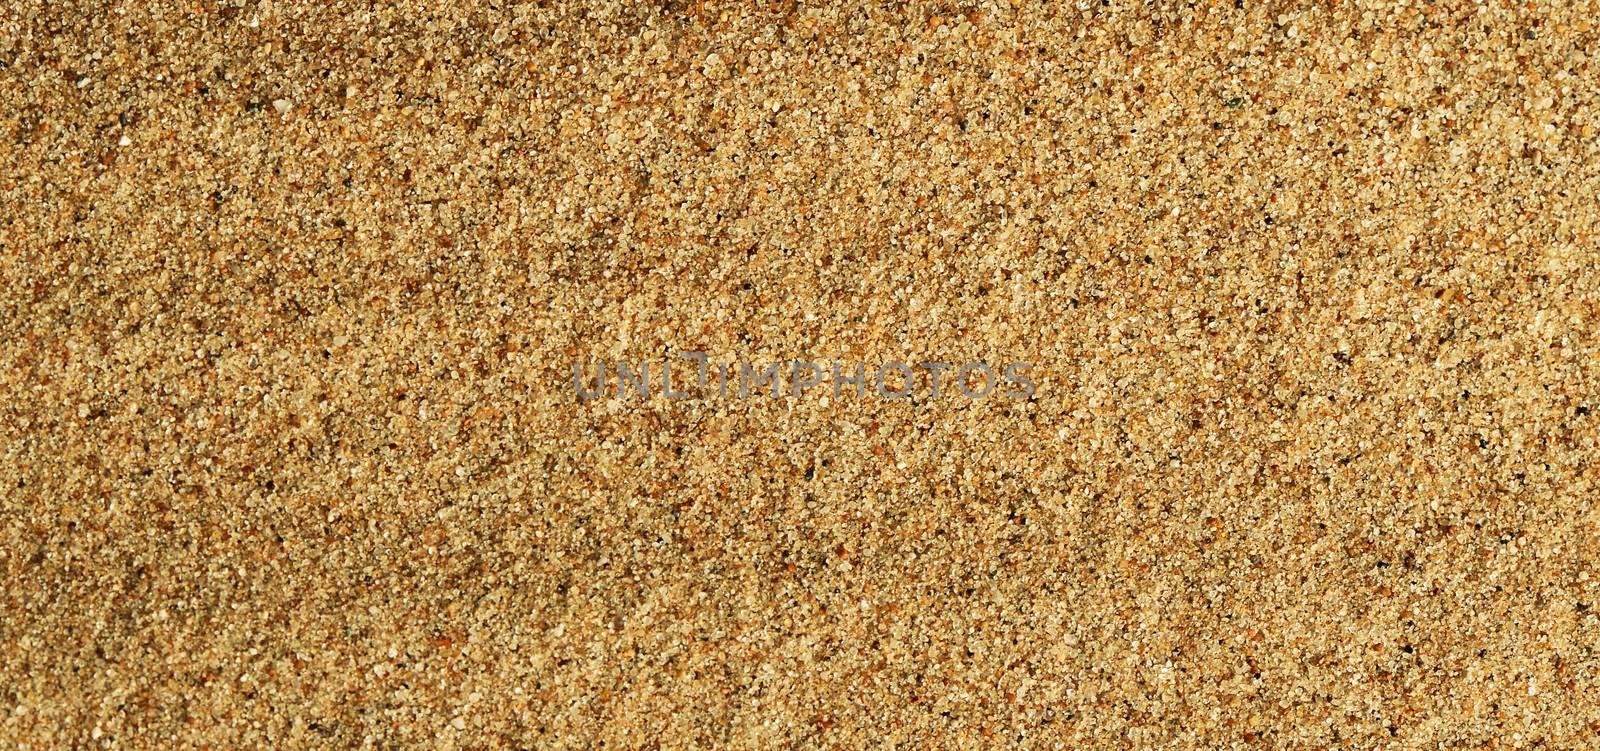 Sand texture as a background by SvetaVo